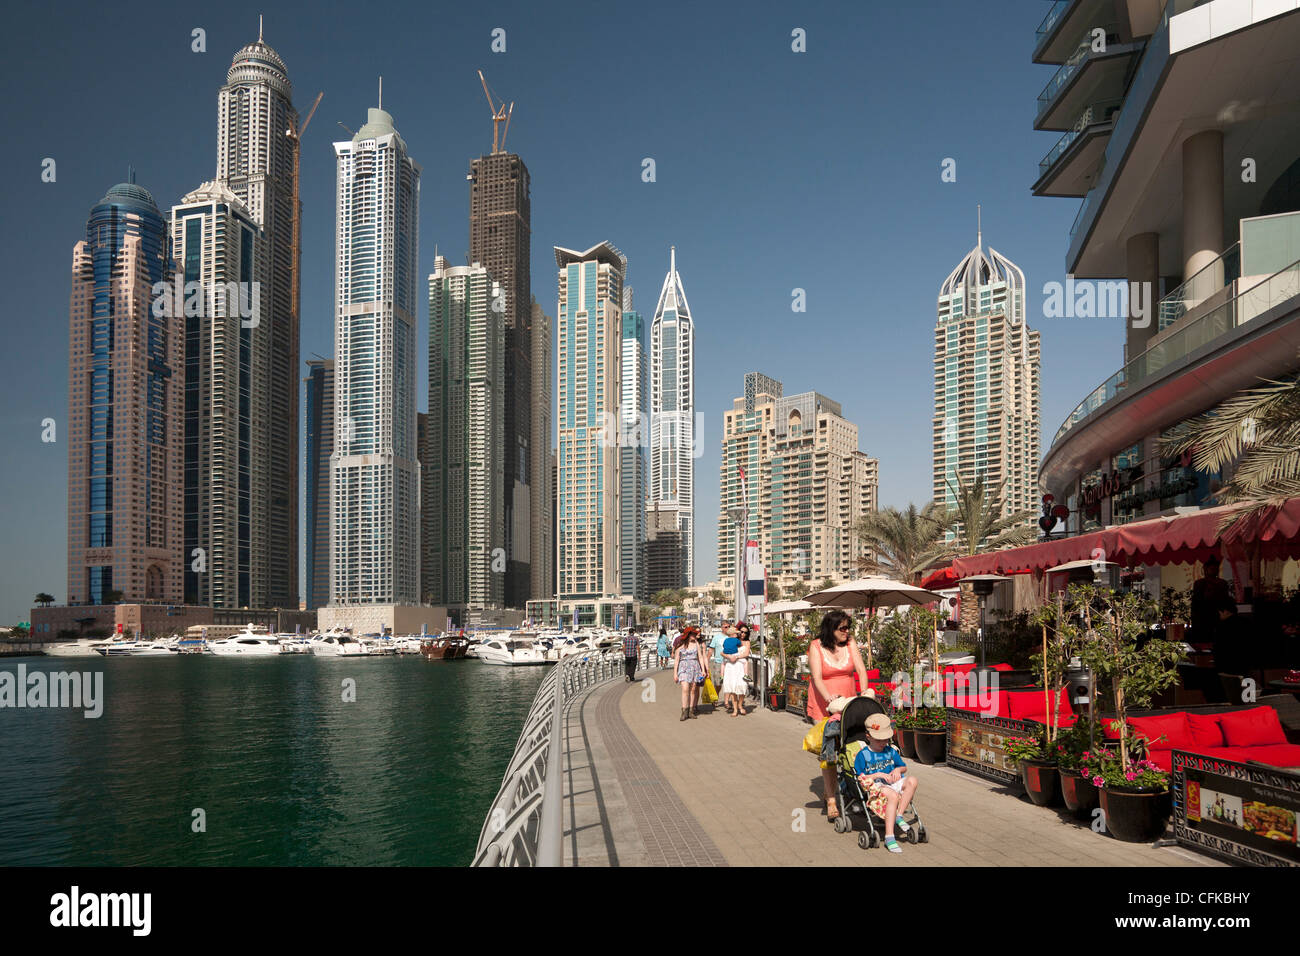 The skyscrapers of the 'Dubai Marina' area (Dubai - the United Arab Emirates). Les gratte-ciel du quartier 'Dubai Marina'. Stock Photo